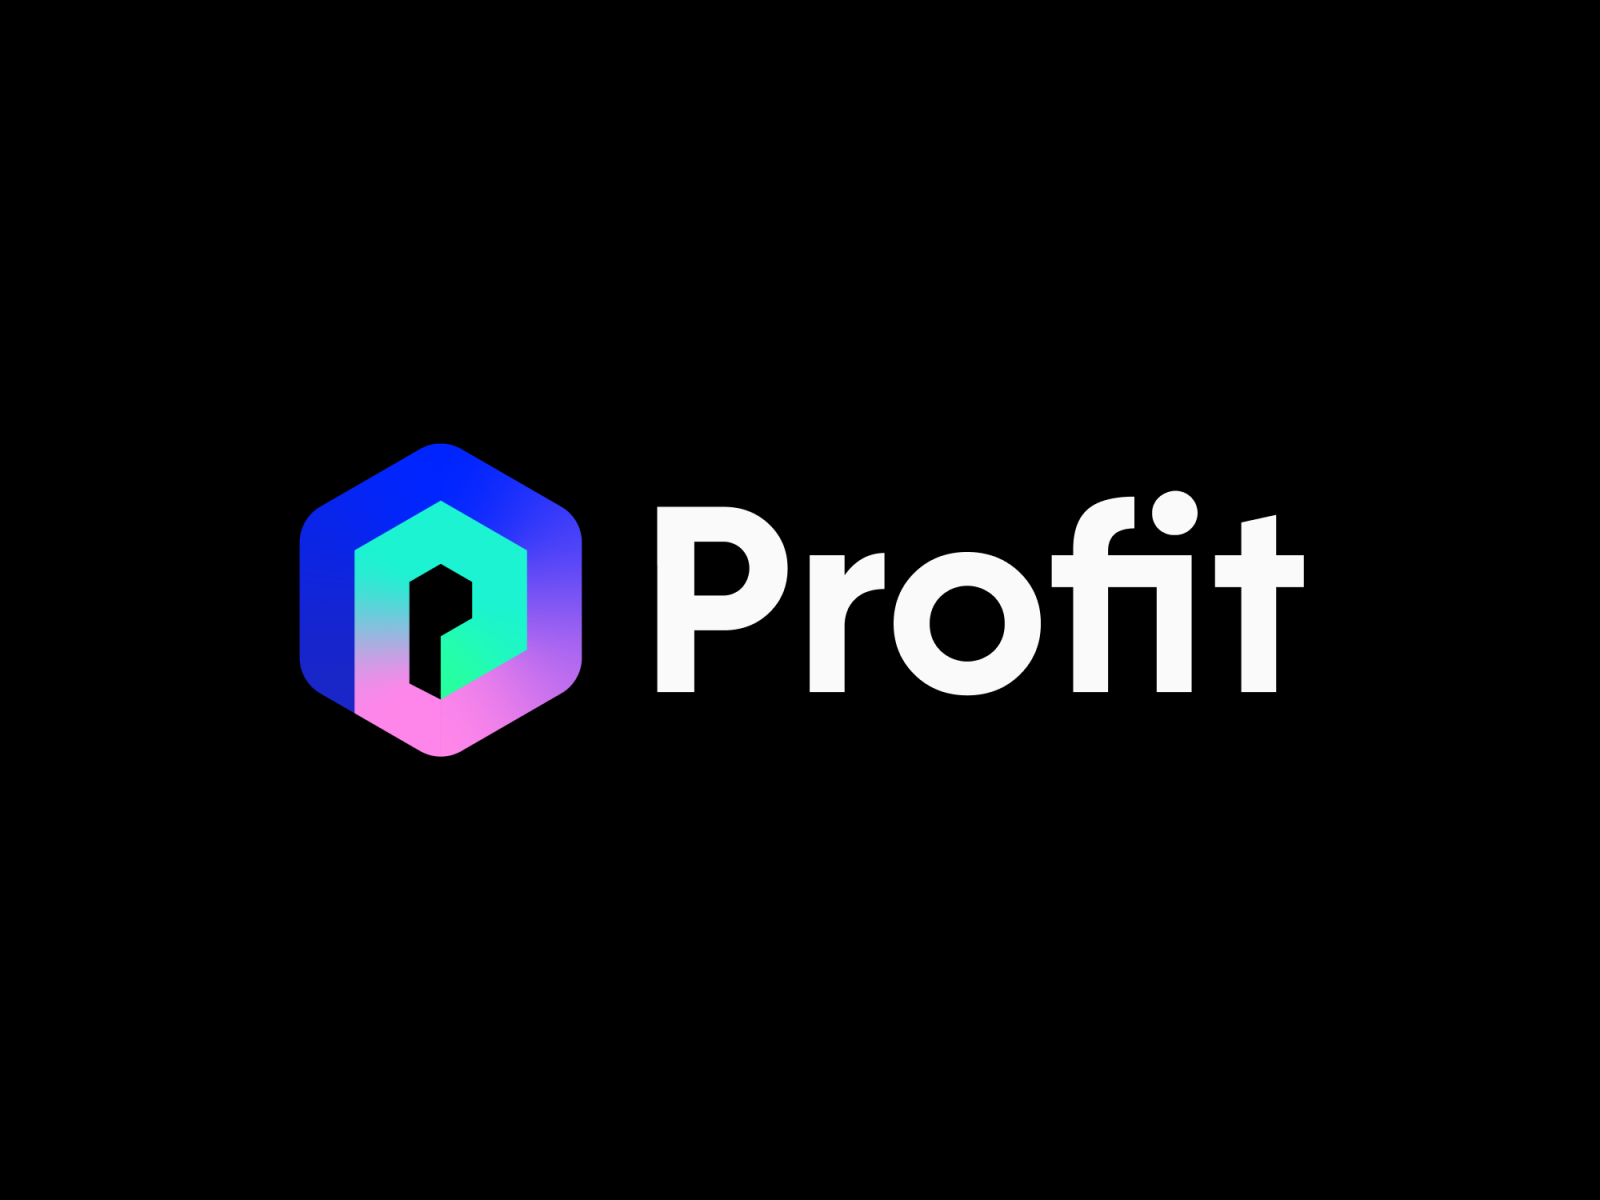 Profit Logo and Brand Identity Design